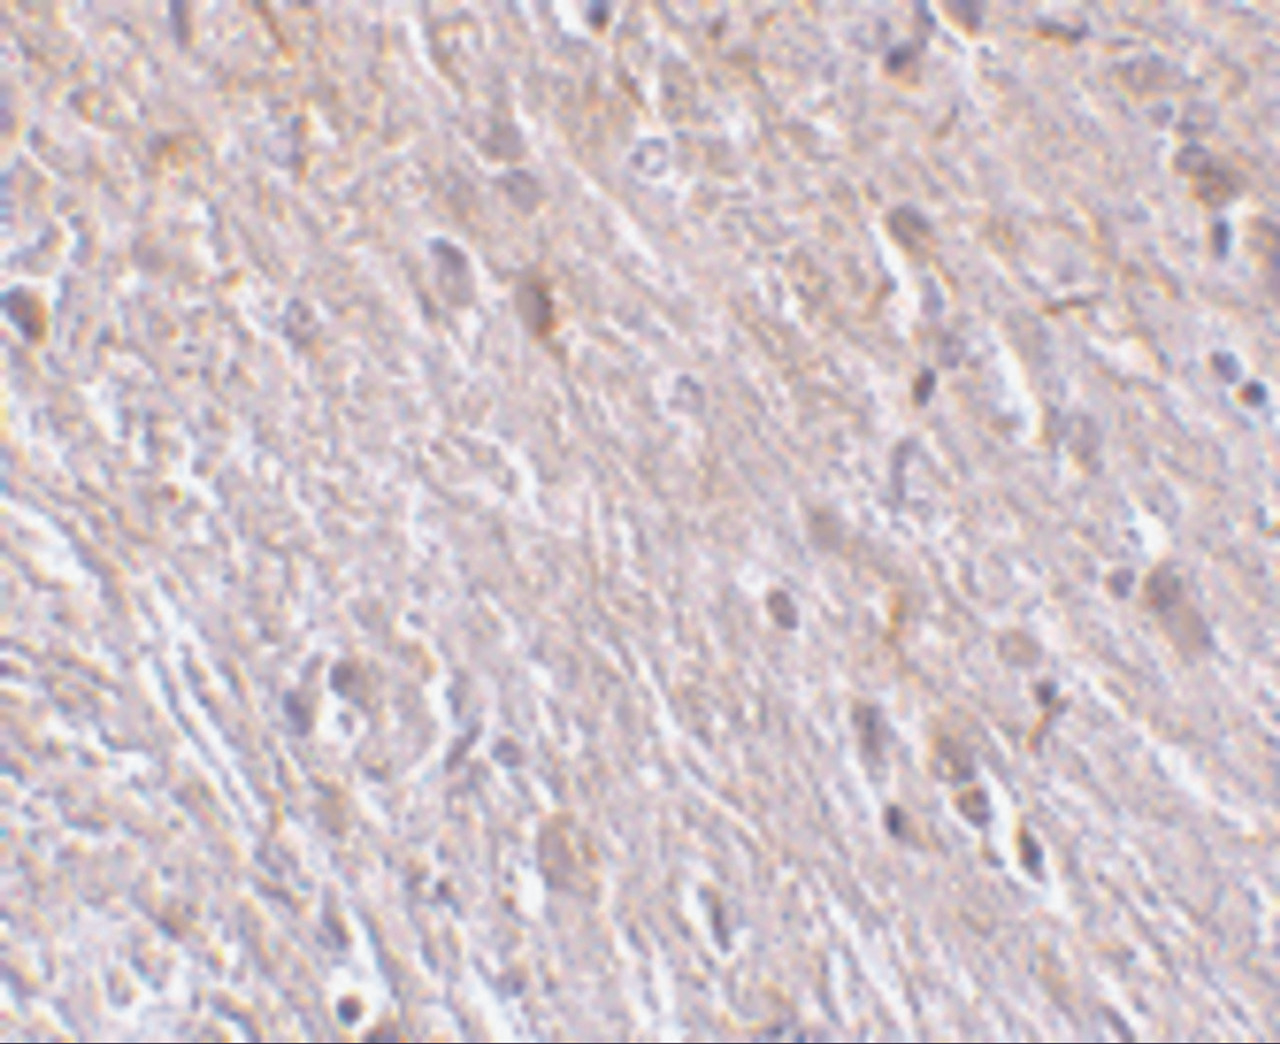 Immunohistochemistry of TTC5 in mouse brain tissue with TTC5 antibody at 10 ug/mL.